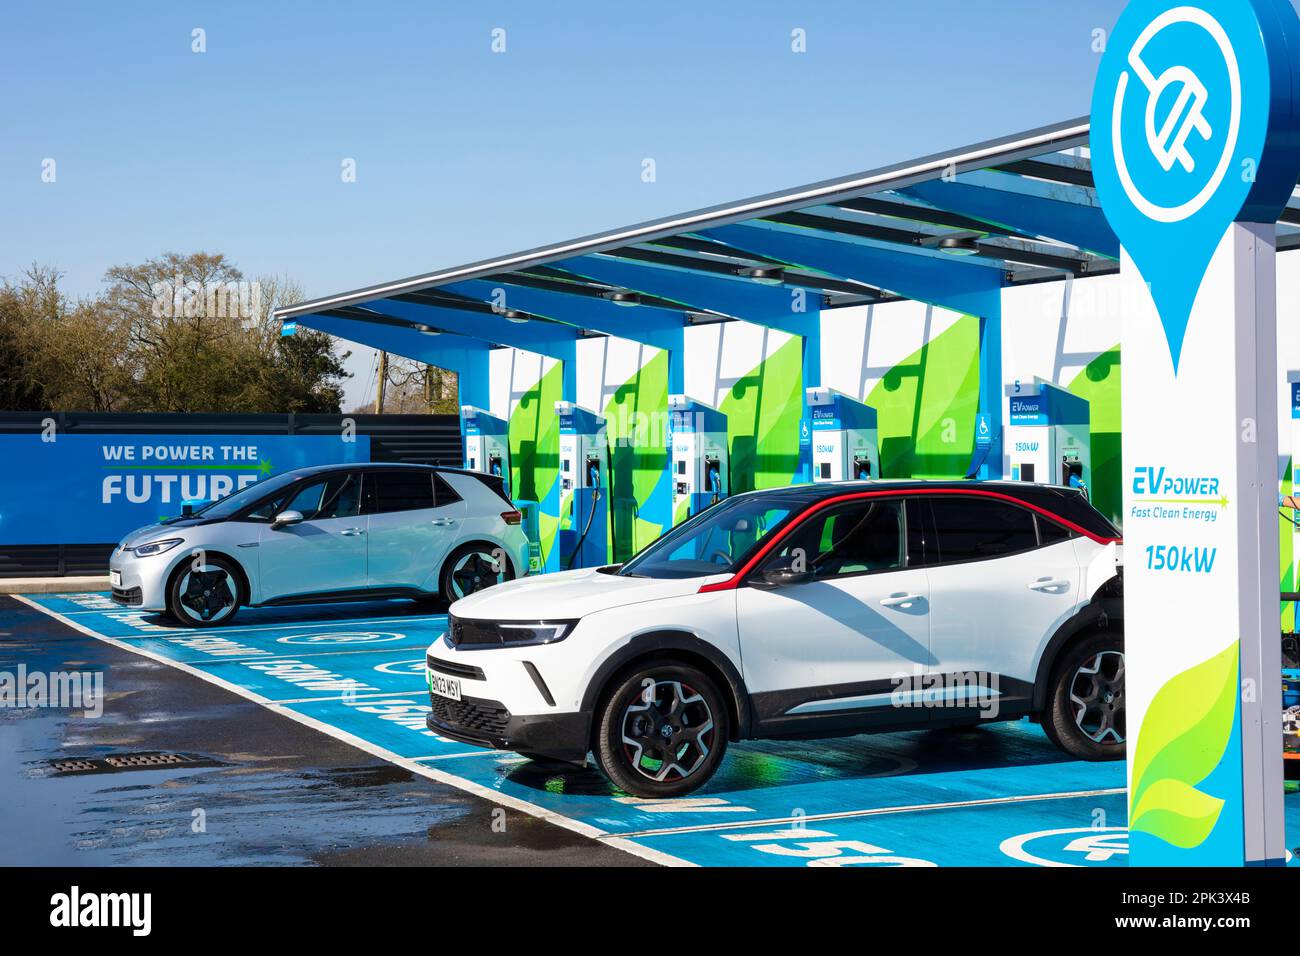 https://c8.alamy.com/comp/2PK3X4B/electric-cars-uk-electric-cars-charging-at-public-electric-car-chargers-in-an-mfg-ev-power-ev-charging-station-uk-electric-vehicles-2PK3X4B.jpg